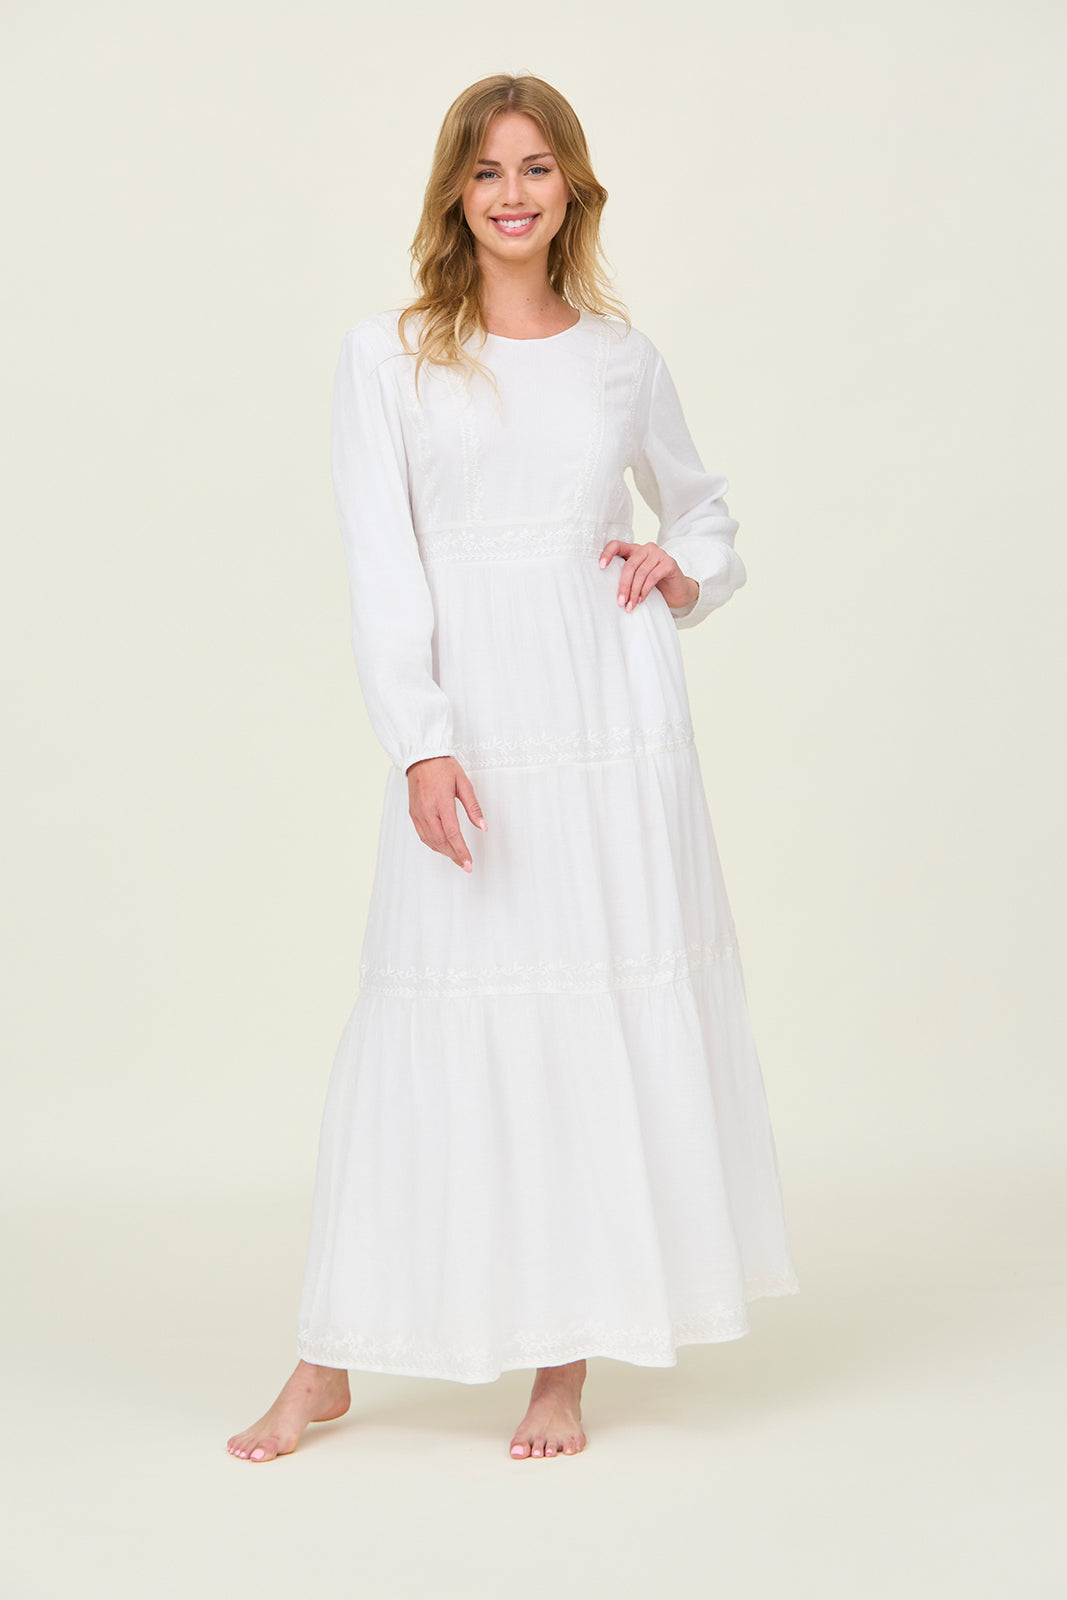 white temple dresses